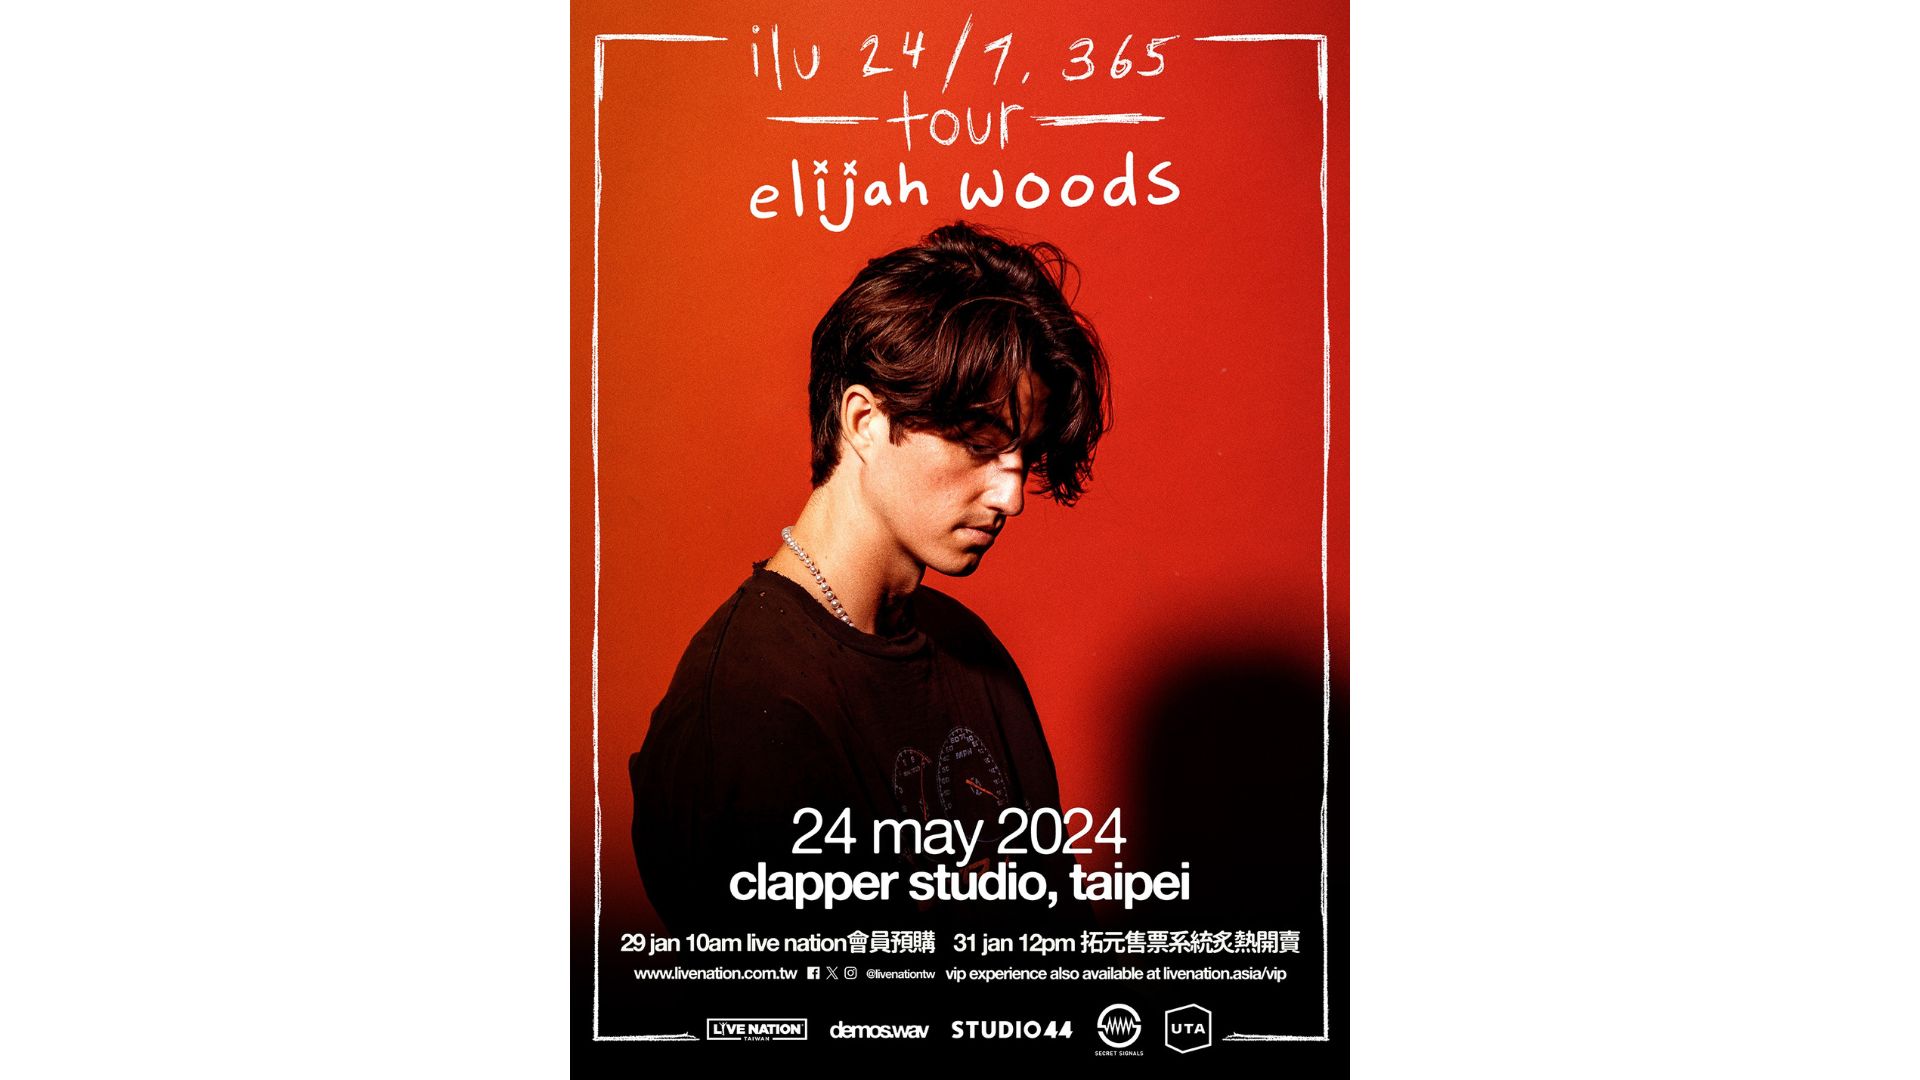 elijah woods演唱會2024台北站｜elijah woods : ilu 24/7, 365 tour｜Clapper Studio